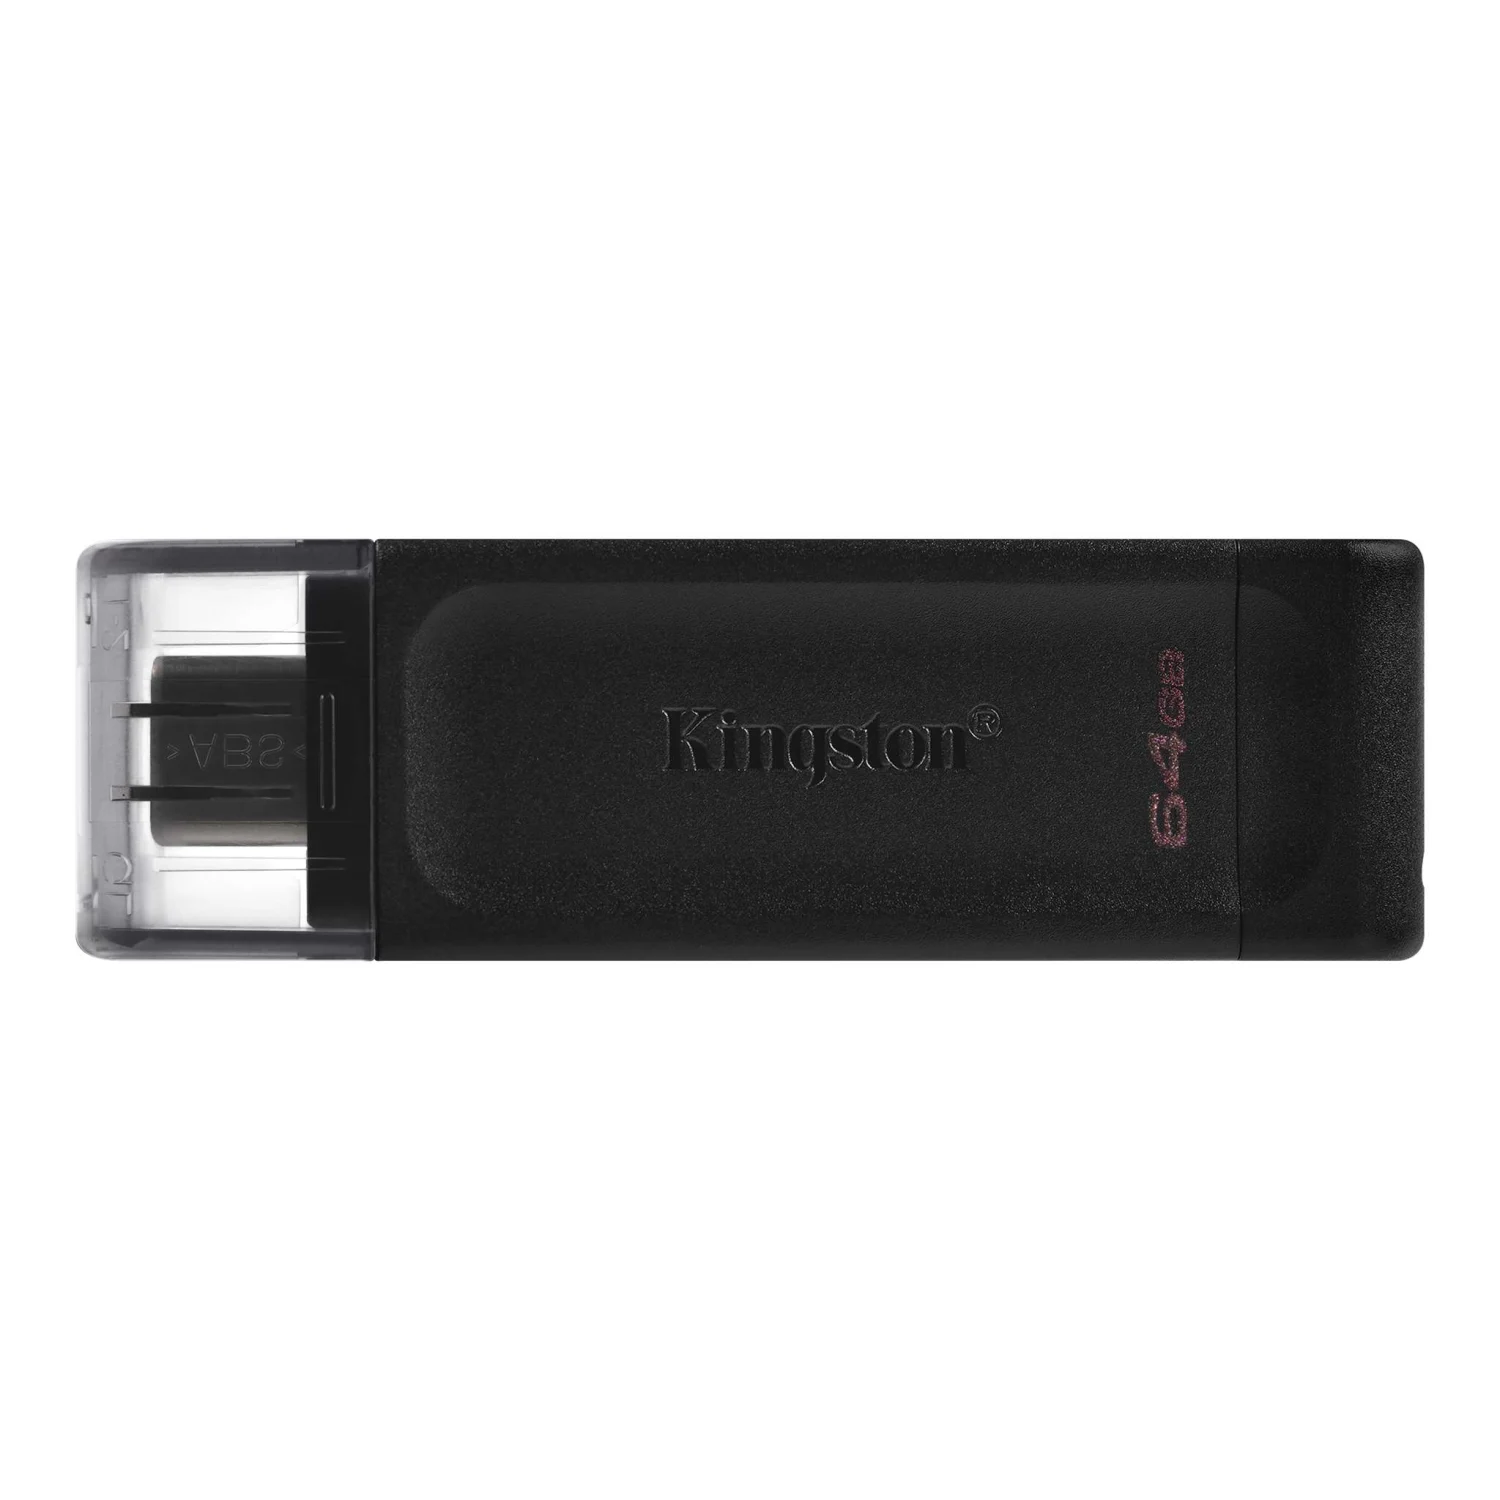 Pendrive Kingston DataTraveler 64GB USB-C/USB 3.2 - Preto DT70/64GB